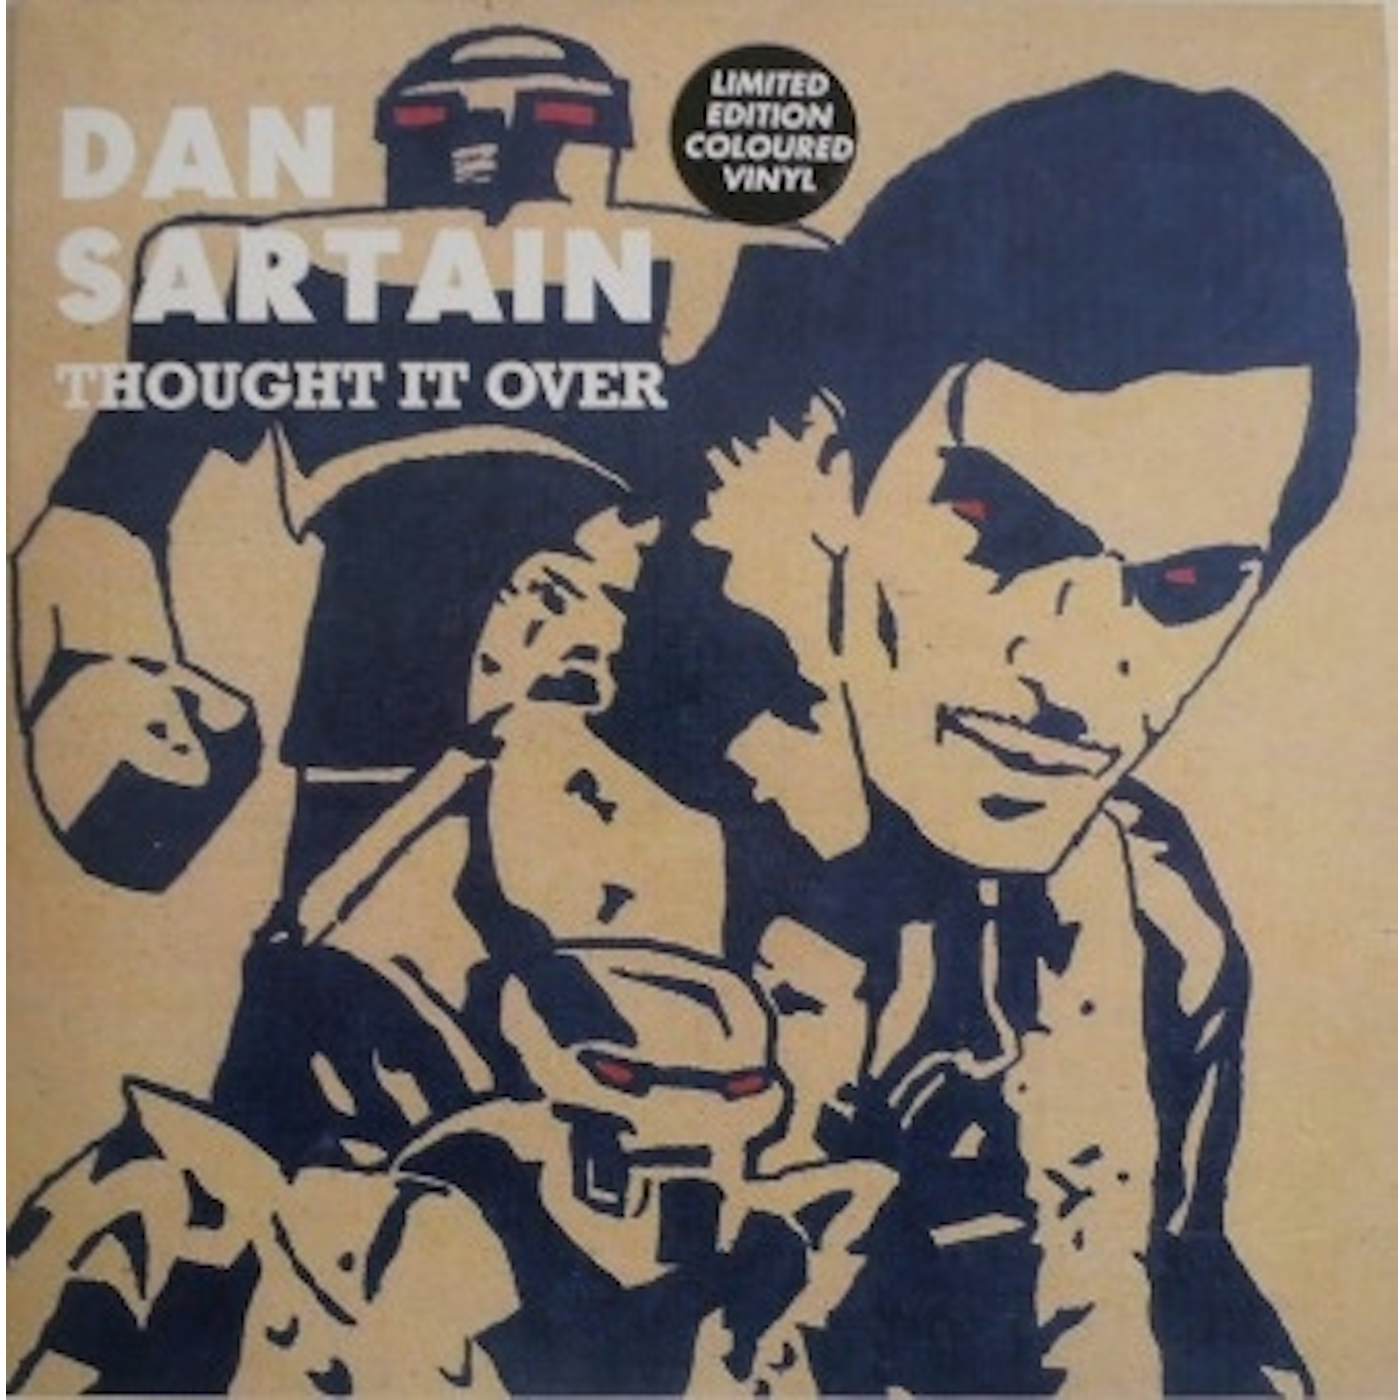 Dan Sartain Thought It Over Vinyl Record